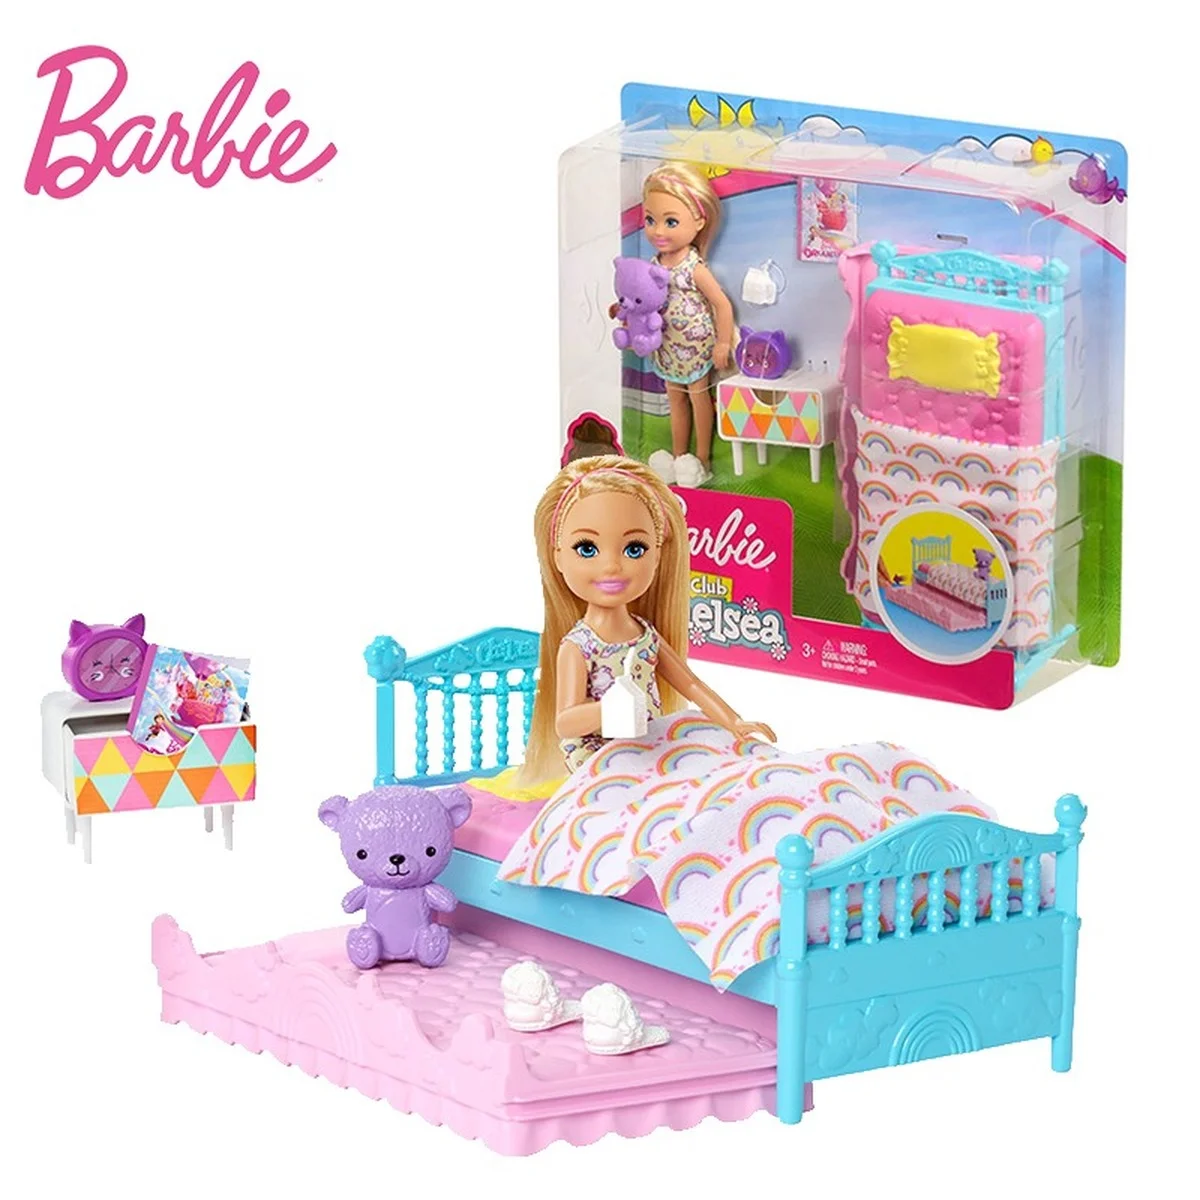 

Original Barbie Chelsea Doll Boneca Baby Bed Time Feature Rainbow Mermaid Good Night Toys for Children Birthday Dolls Girls